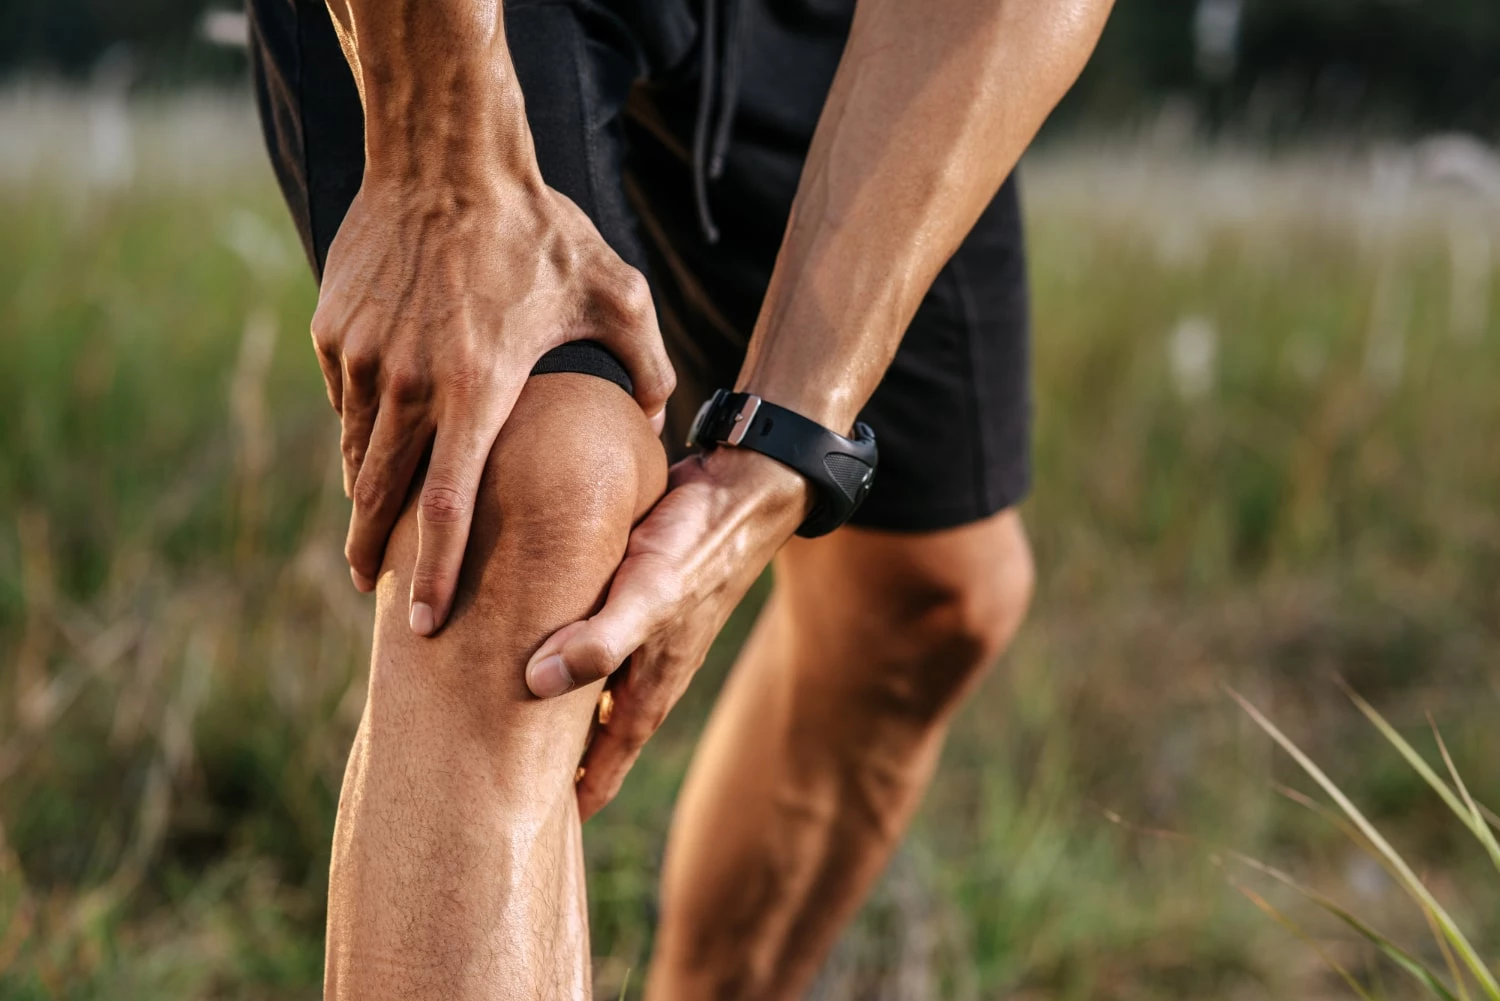 Man benting and grabbing his knee after exercising